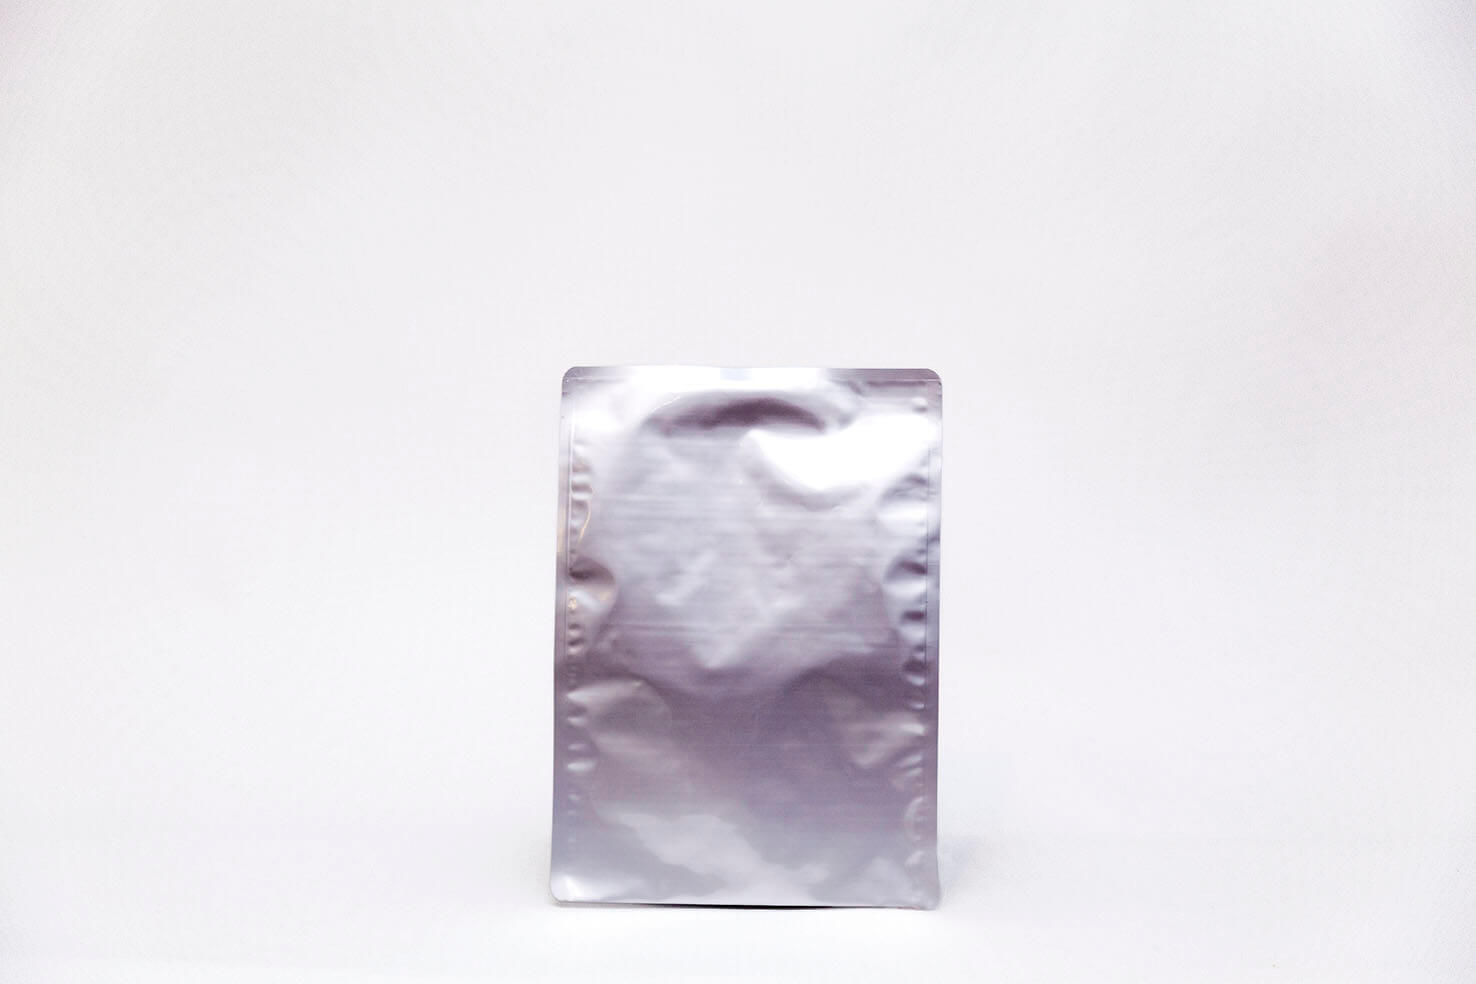 Mejores fabricantes de bolsas para envasar al vacío - Osona Seal Pack